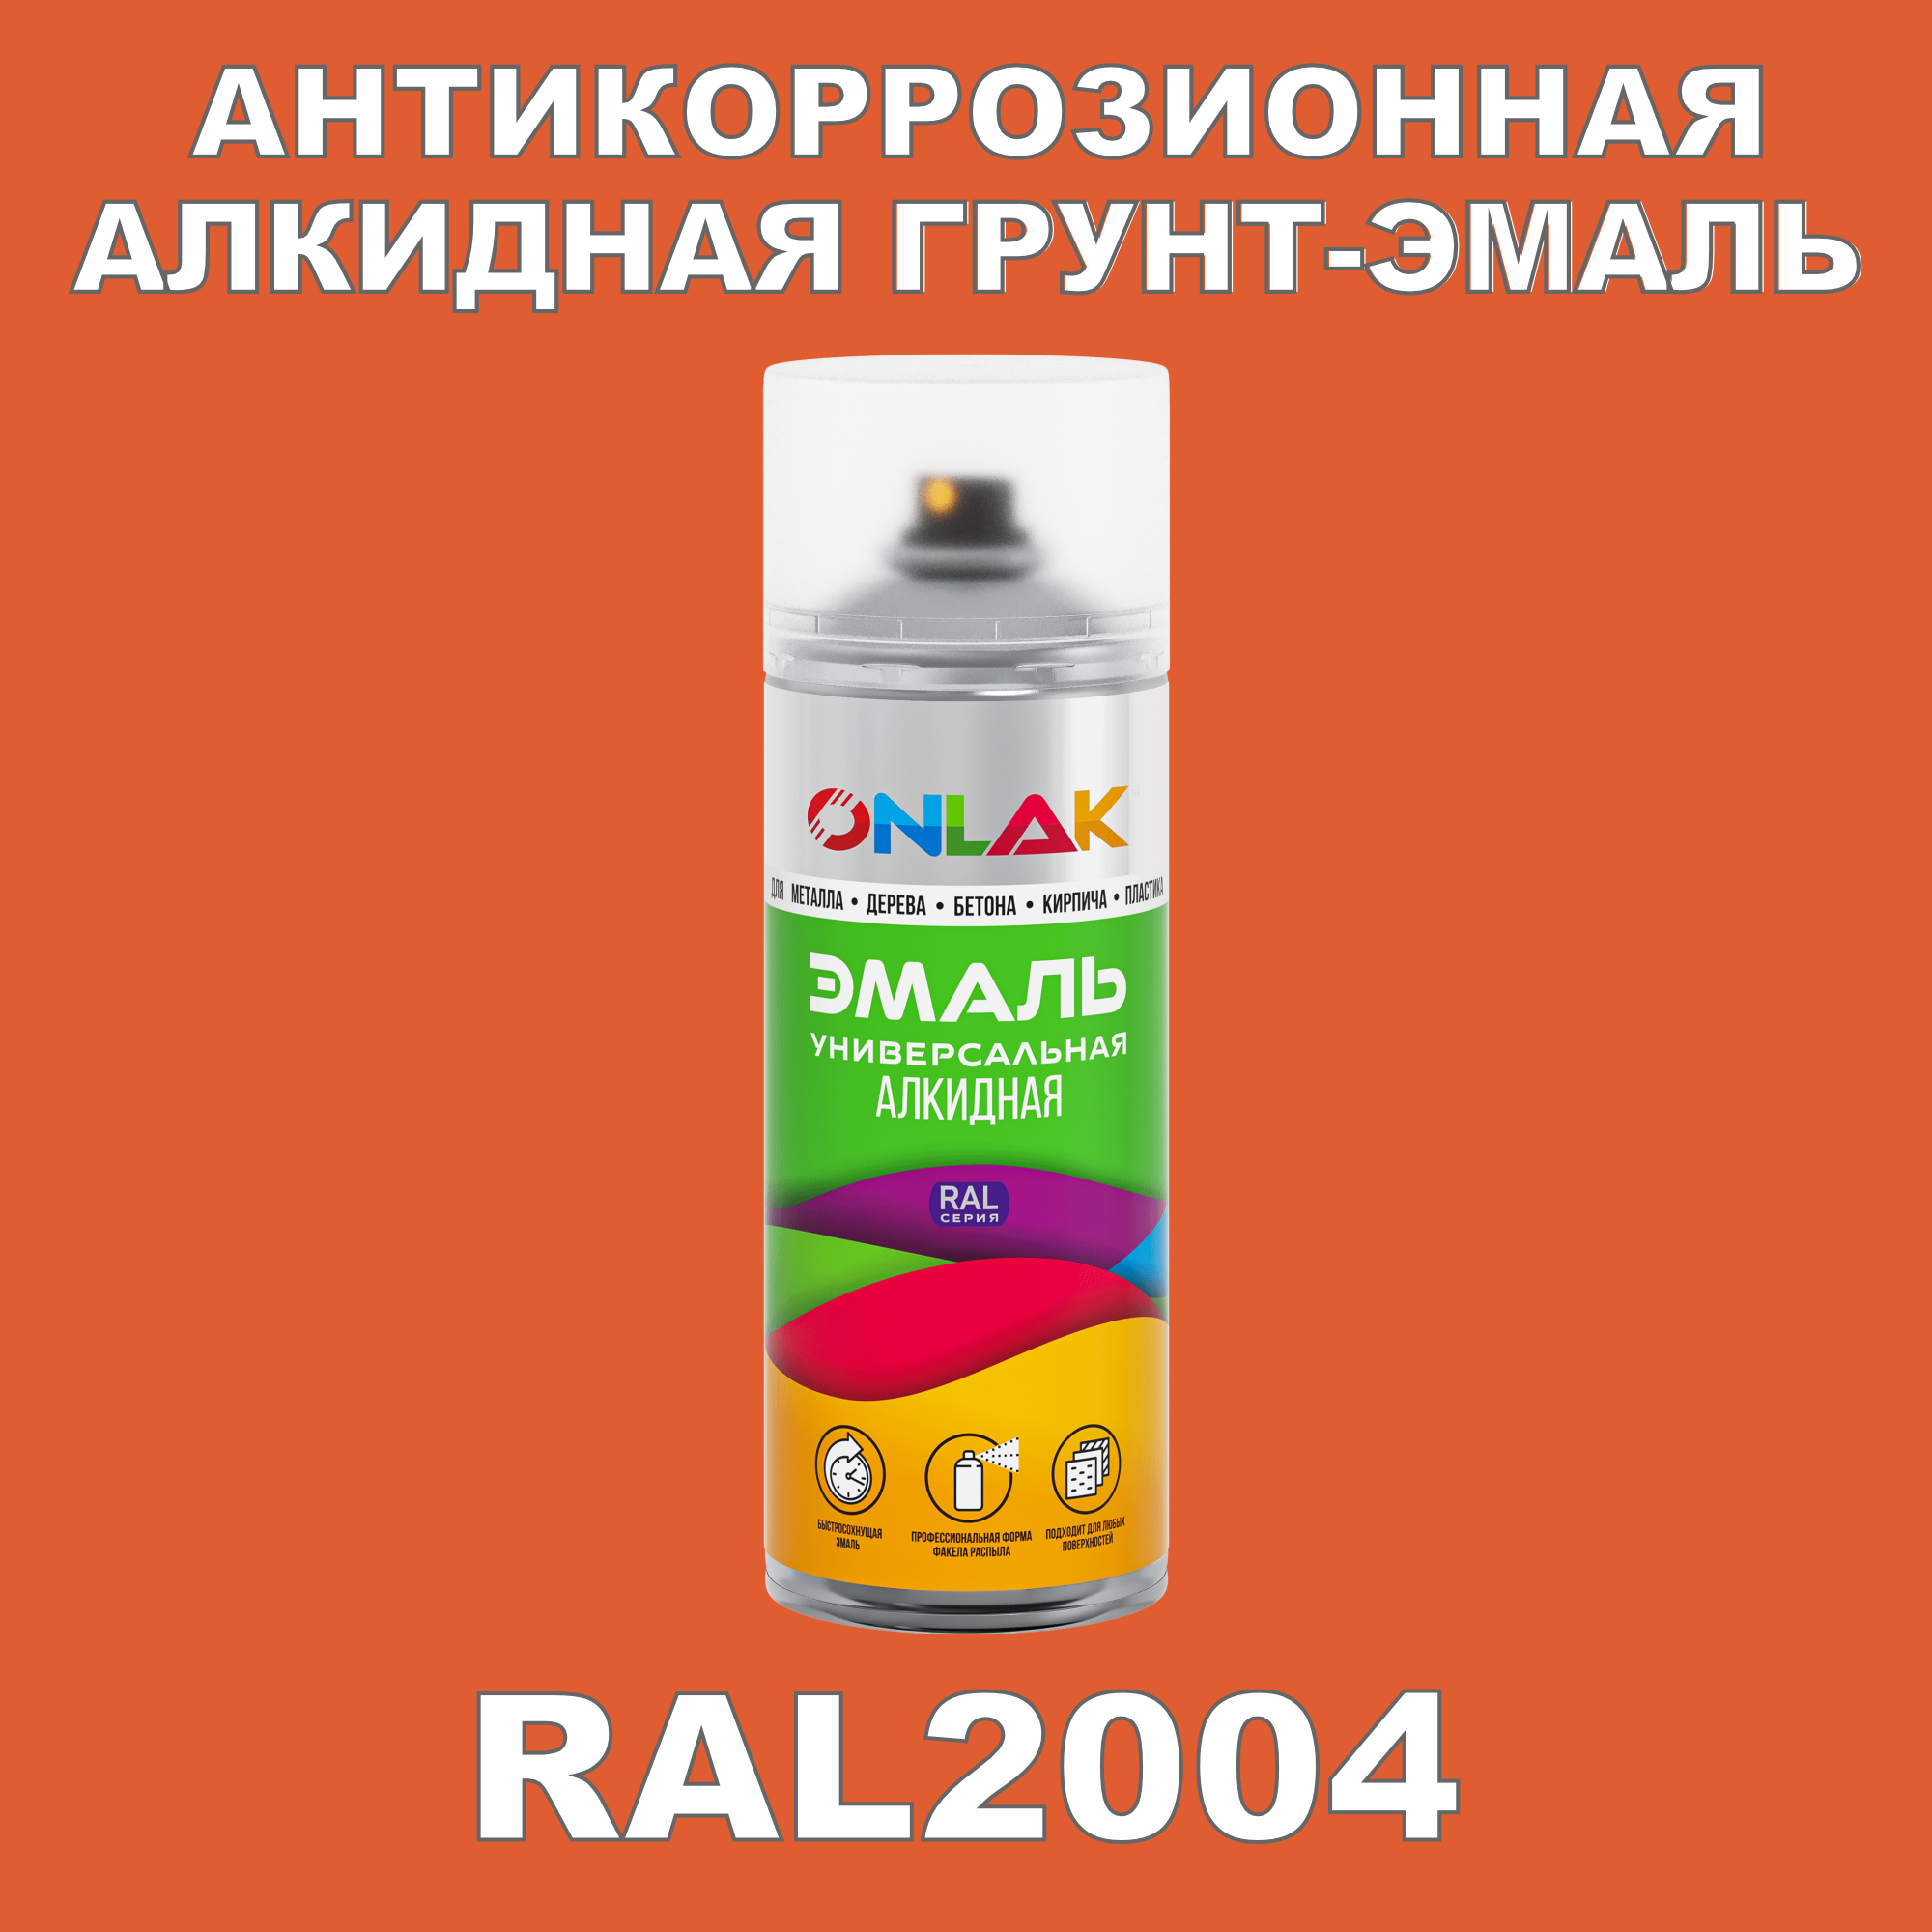 Антикоррозионная грунт-эмаль ONLAK RAL 2004,оранжевый,525 мл